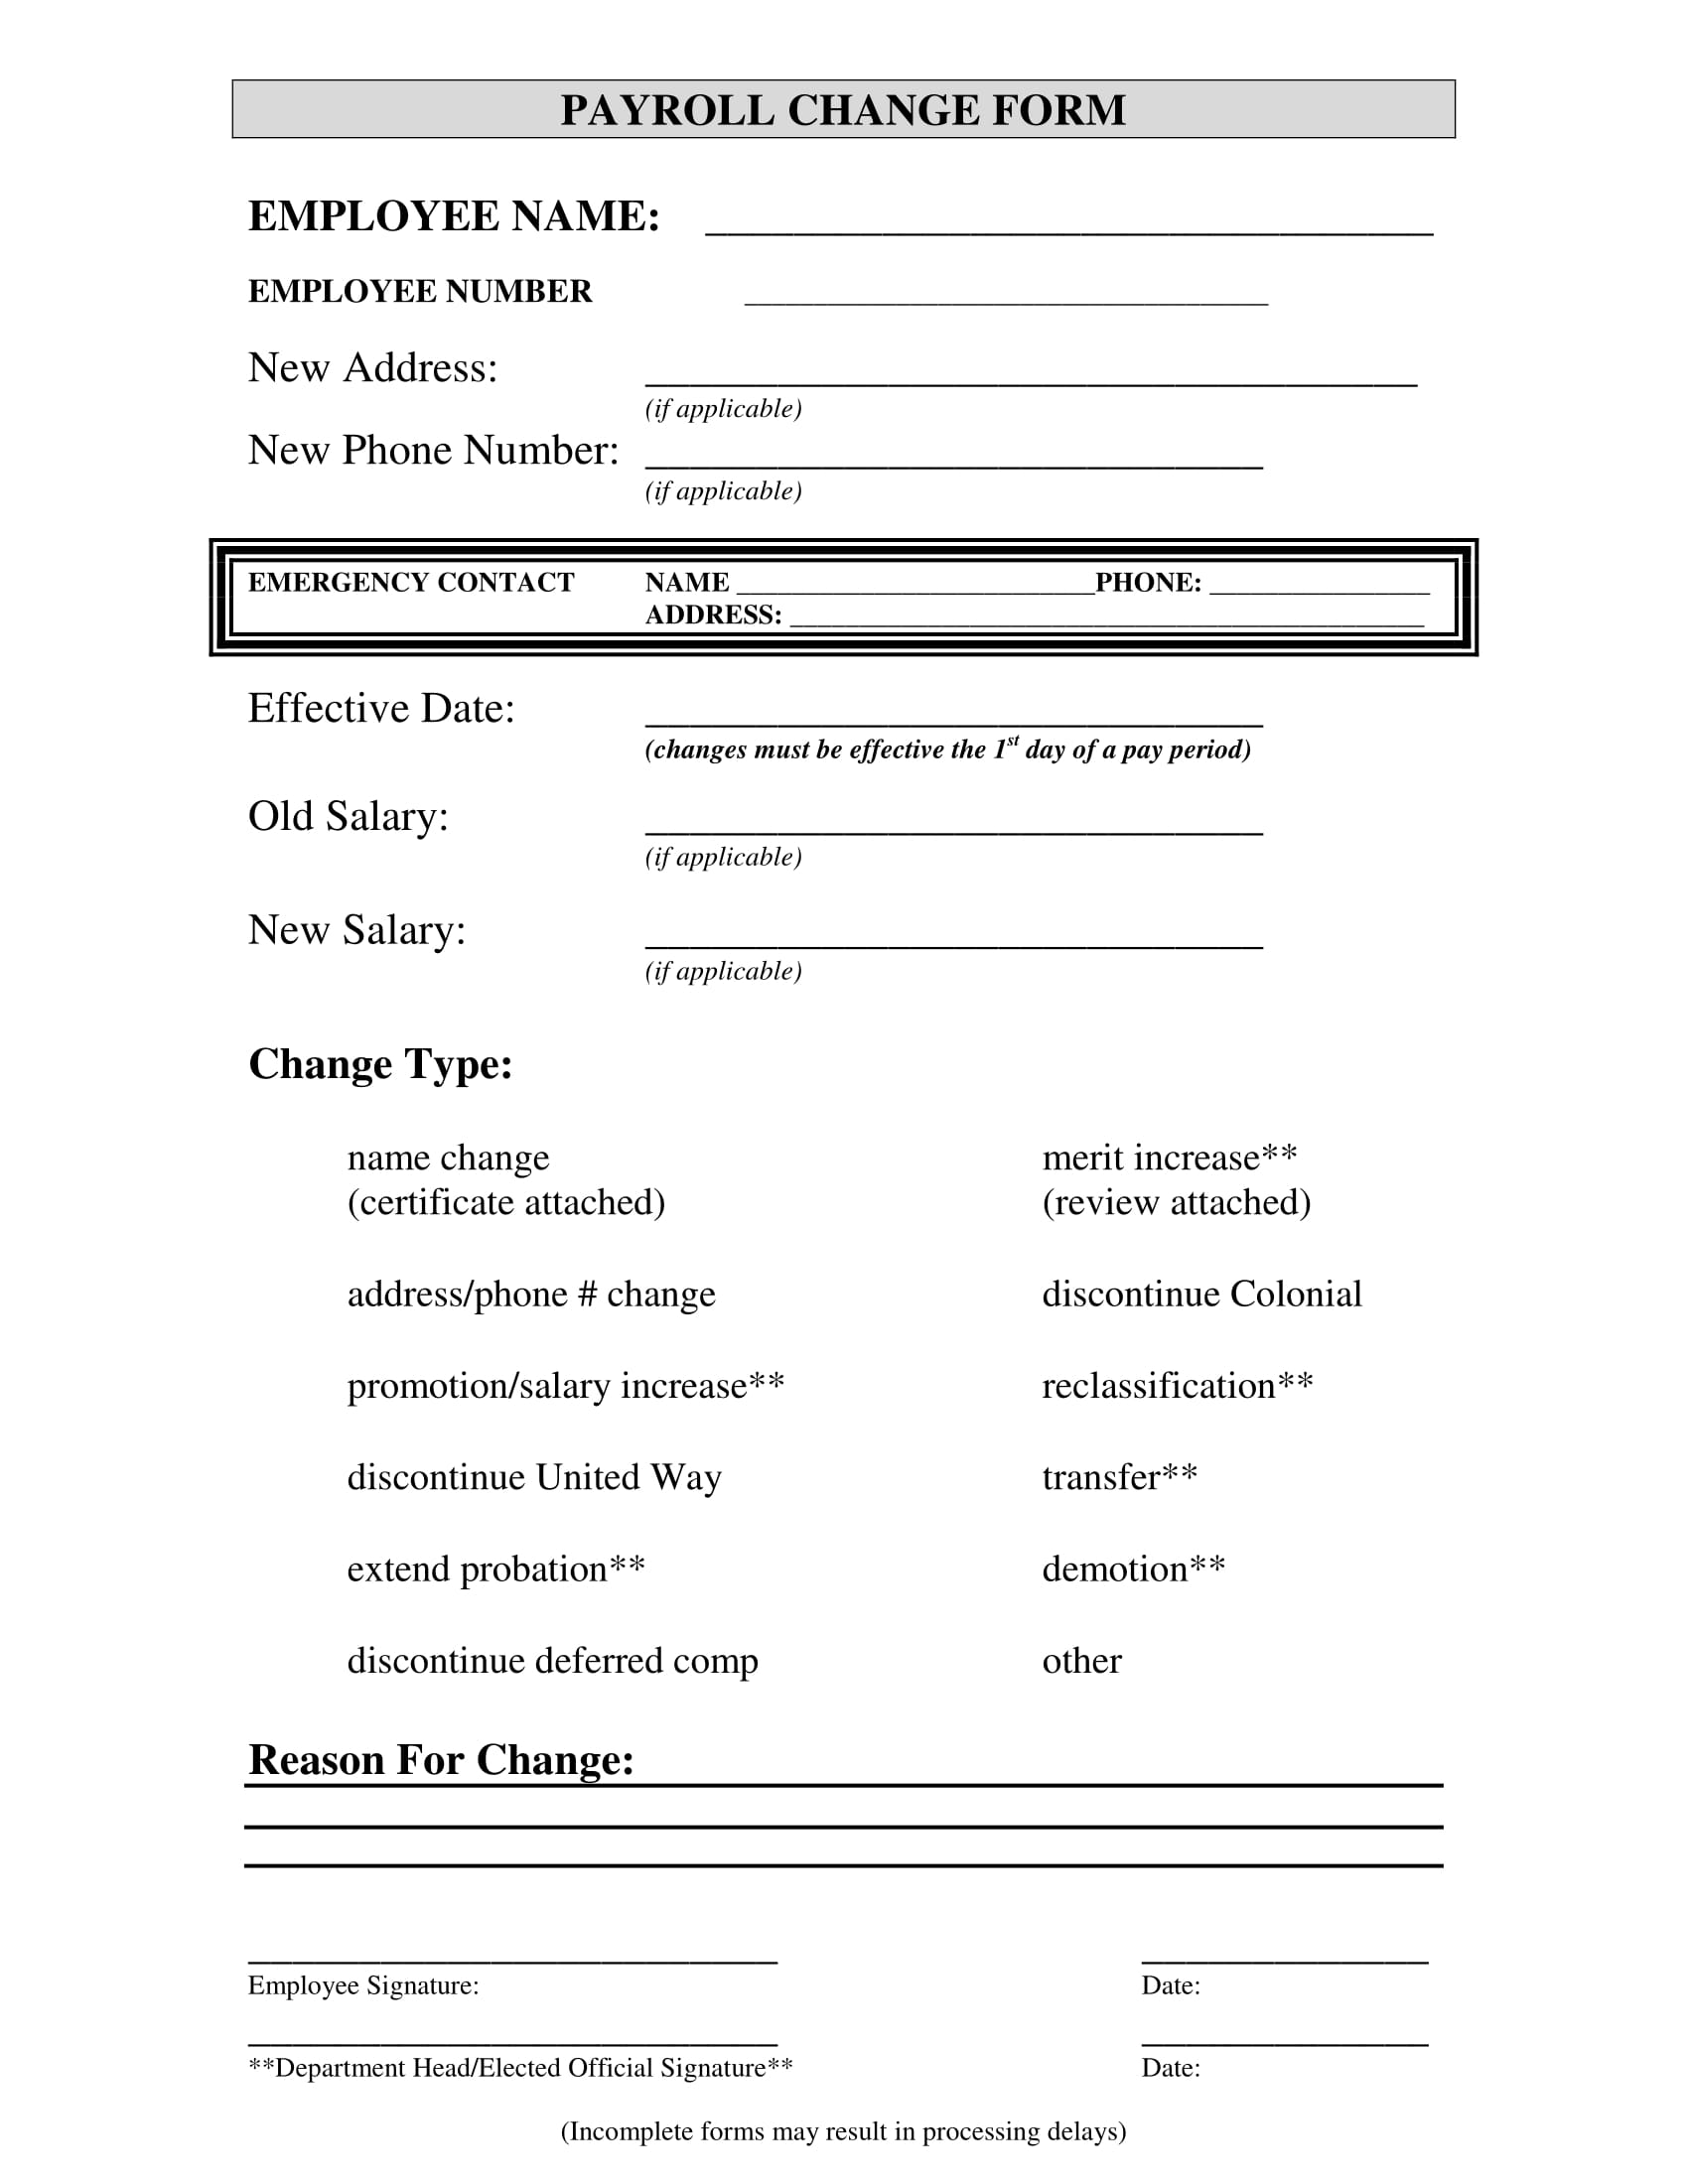 employee payroll change form 1